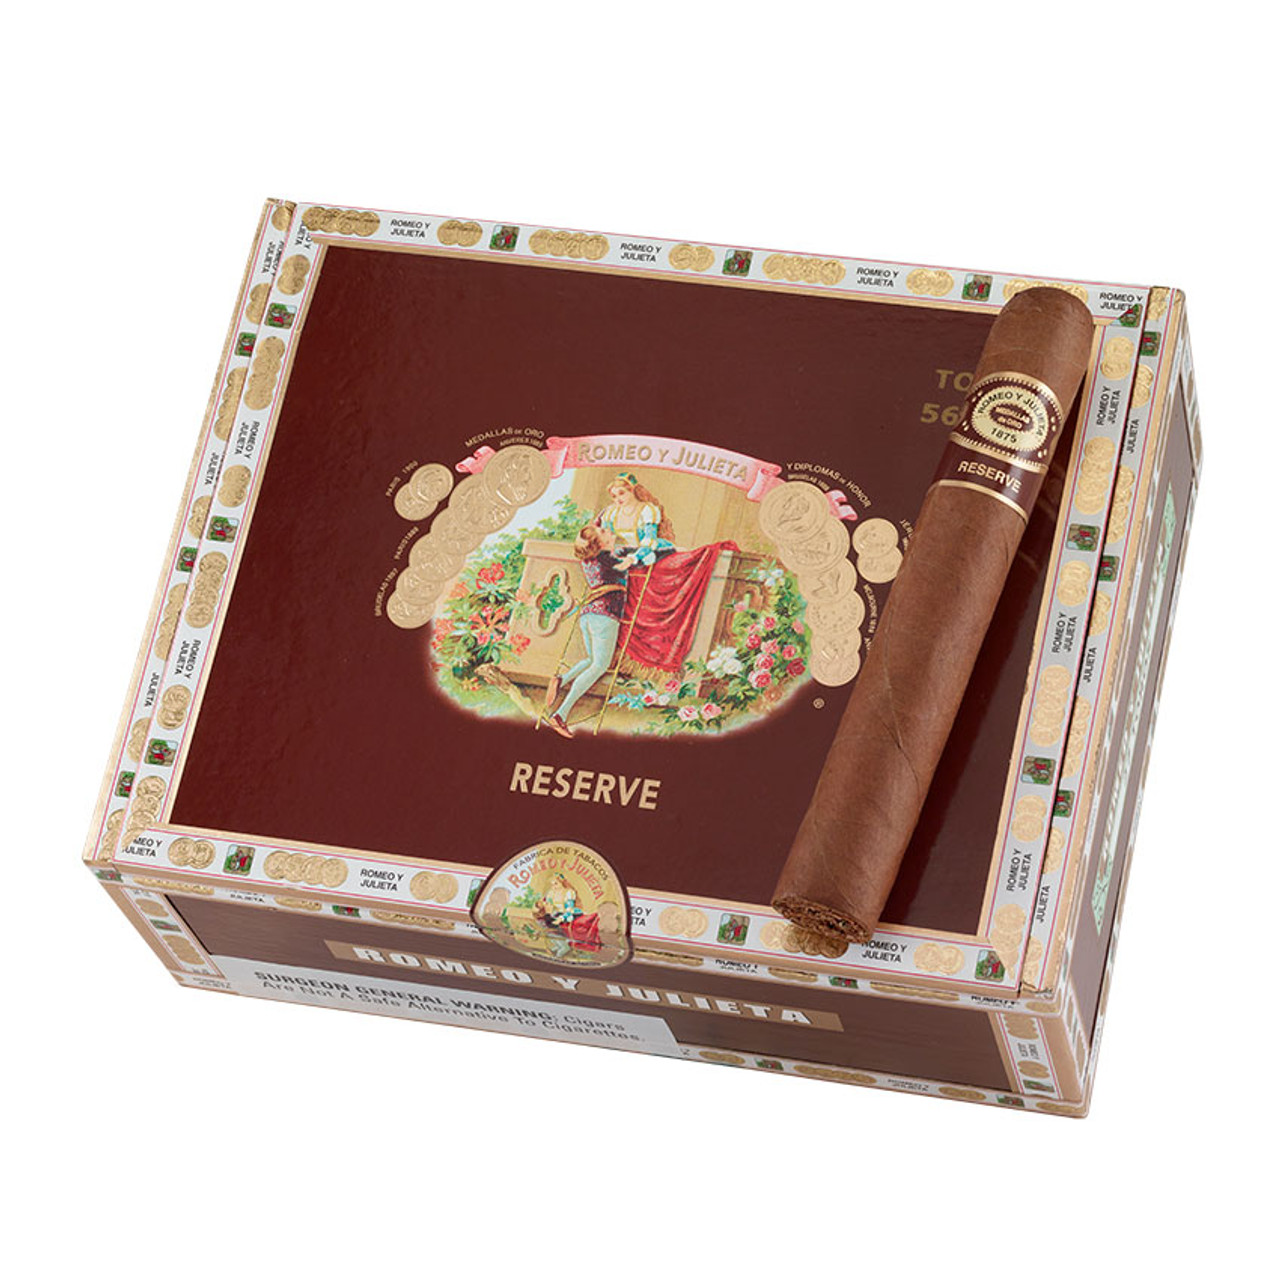 Romeo y Julieta Reserve Toro Cigars - 6 x 56 (Box of 27) *Box